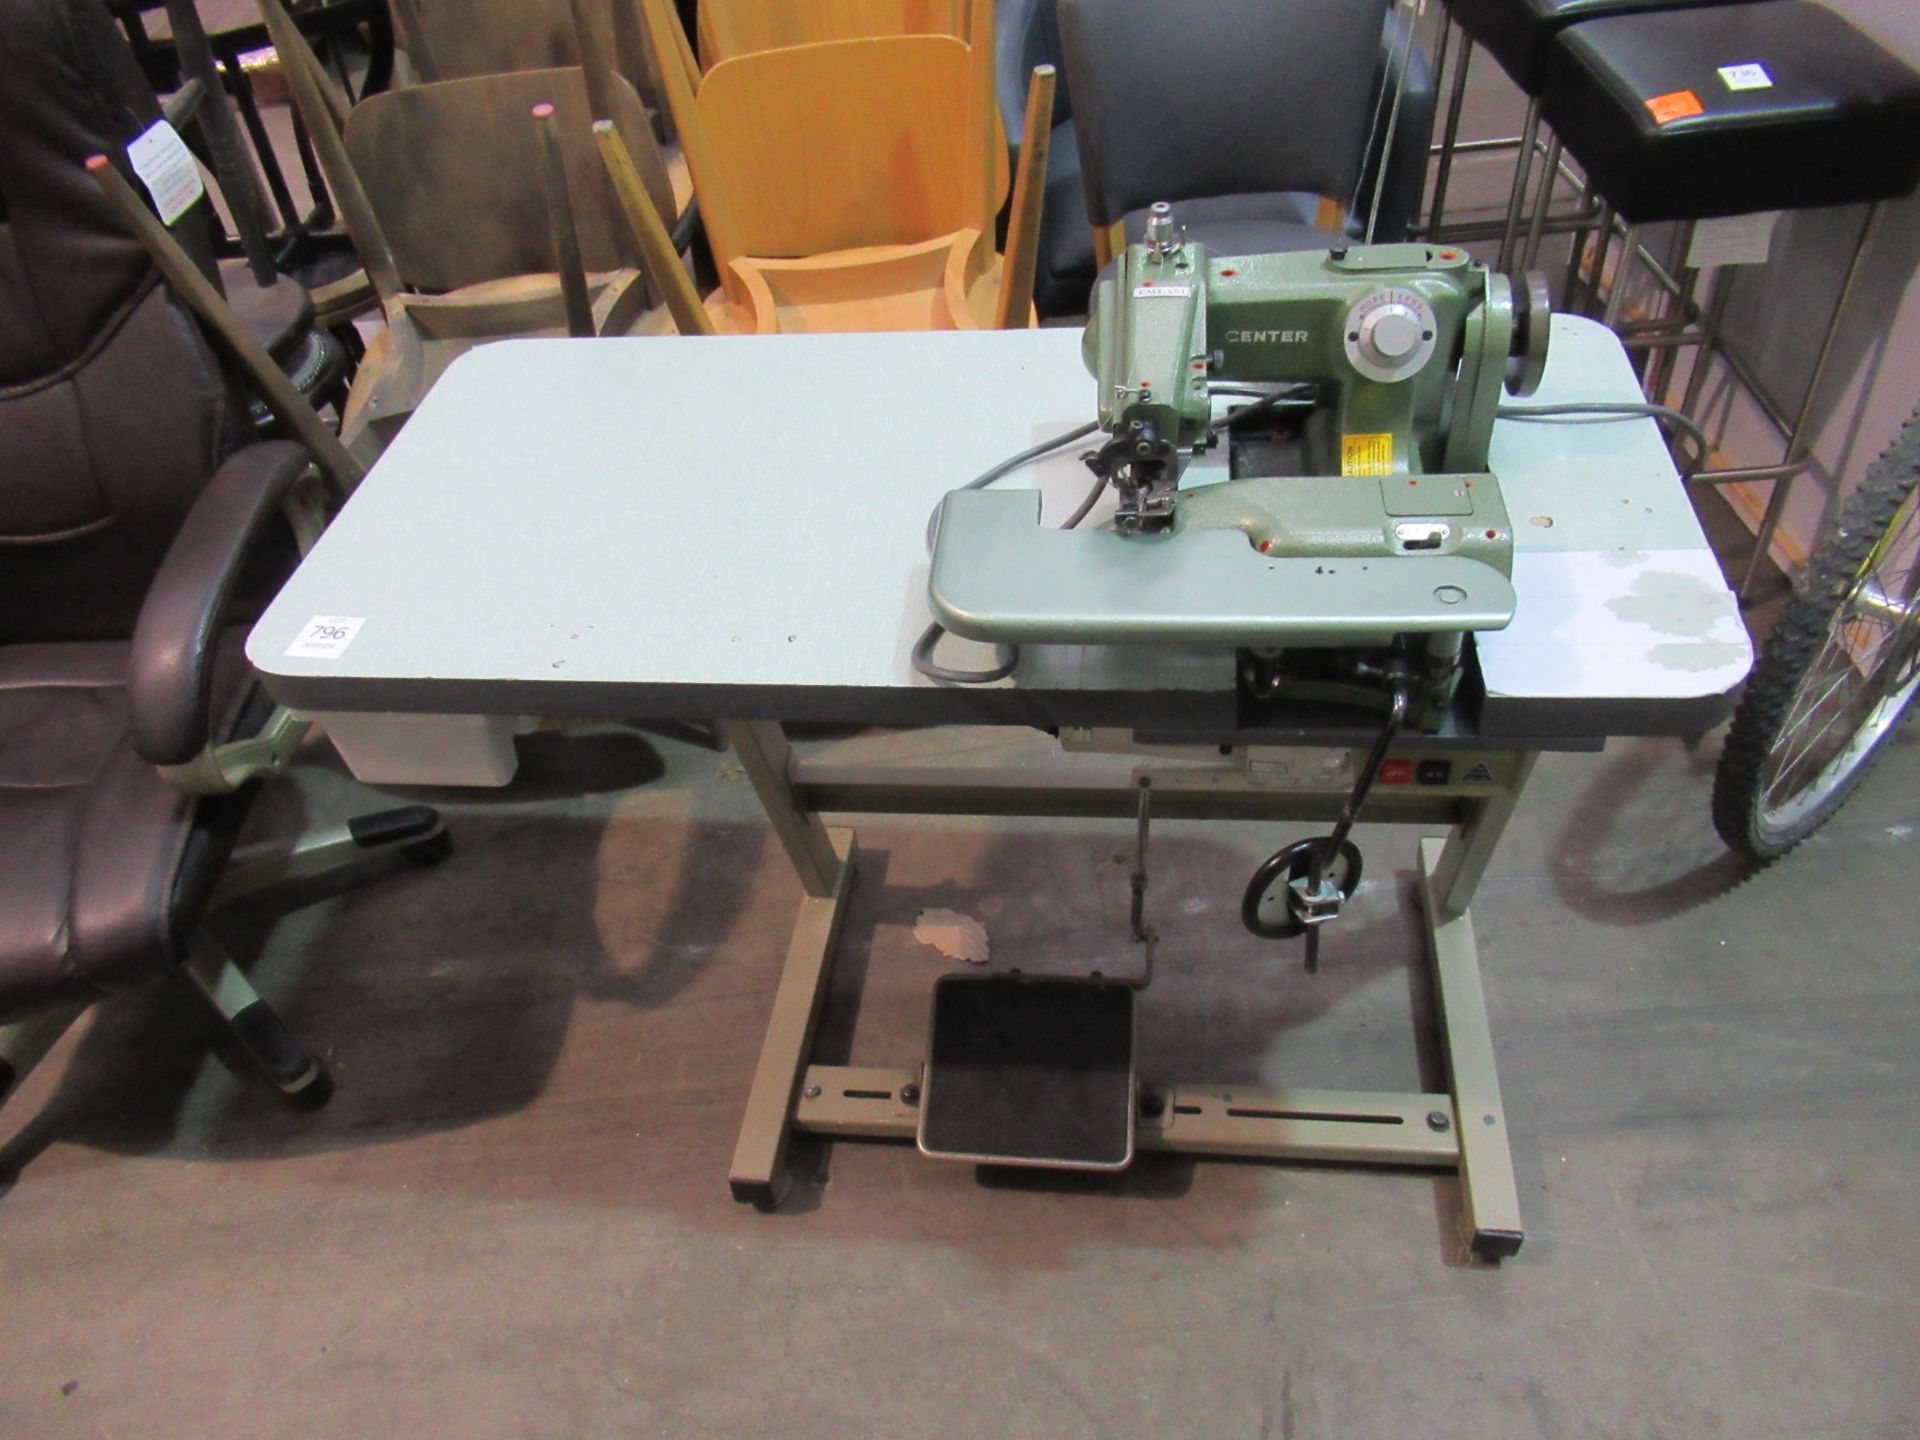 Centre CM3-601 Blind Stitch Sewing Machine Table